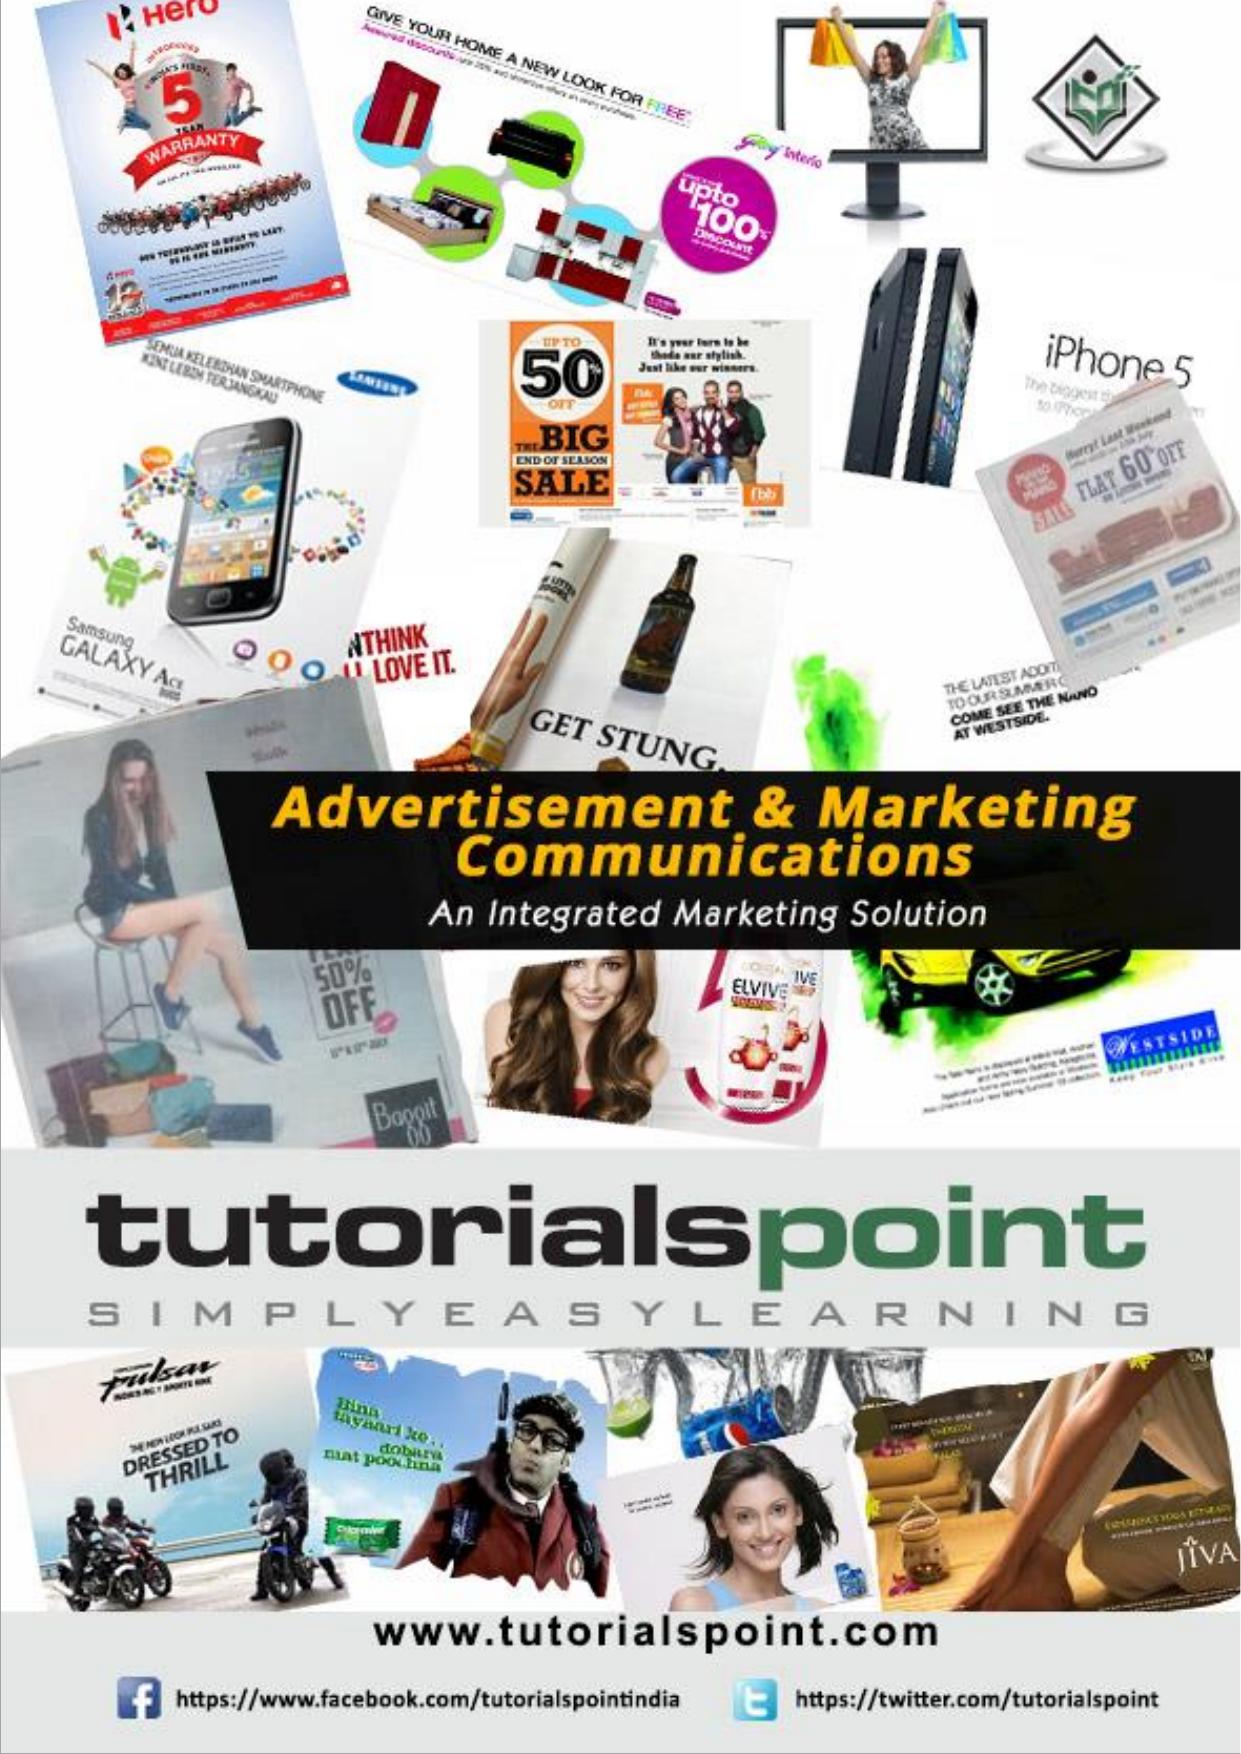 advertisement and marketing communications tutorial